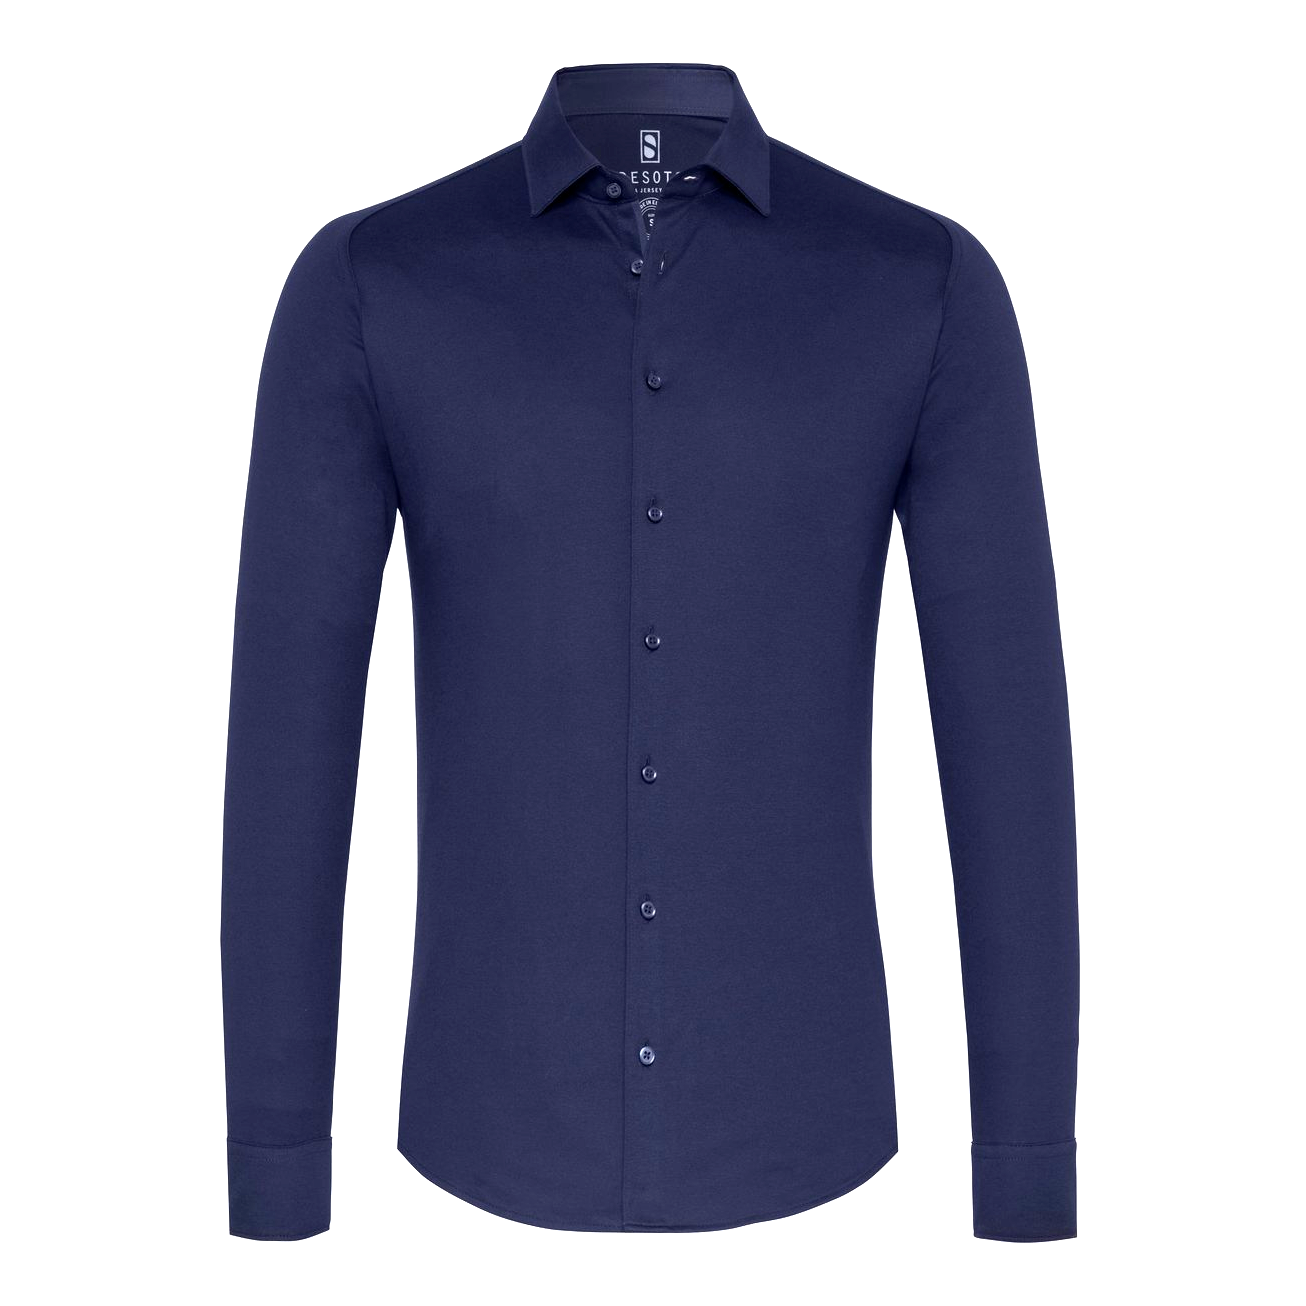 Gotstyle Fashion - Desoto Collar Shirts Basic Jersey Shirt with Kent Collar - Navy